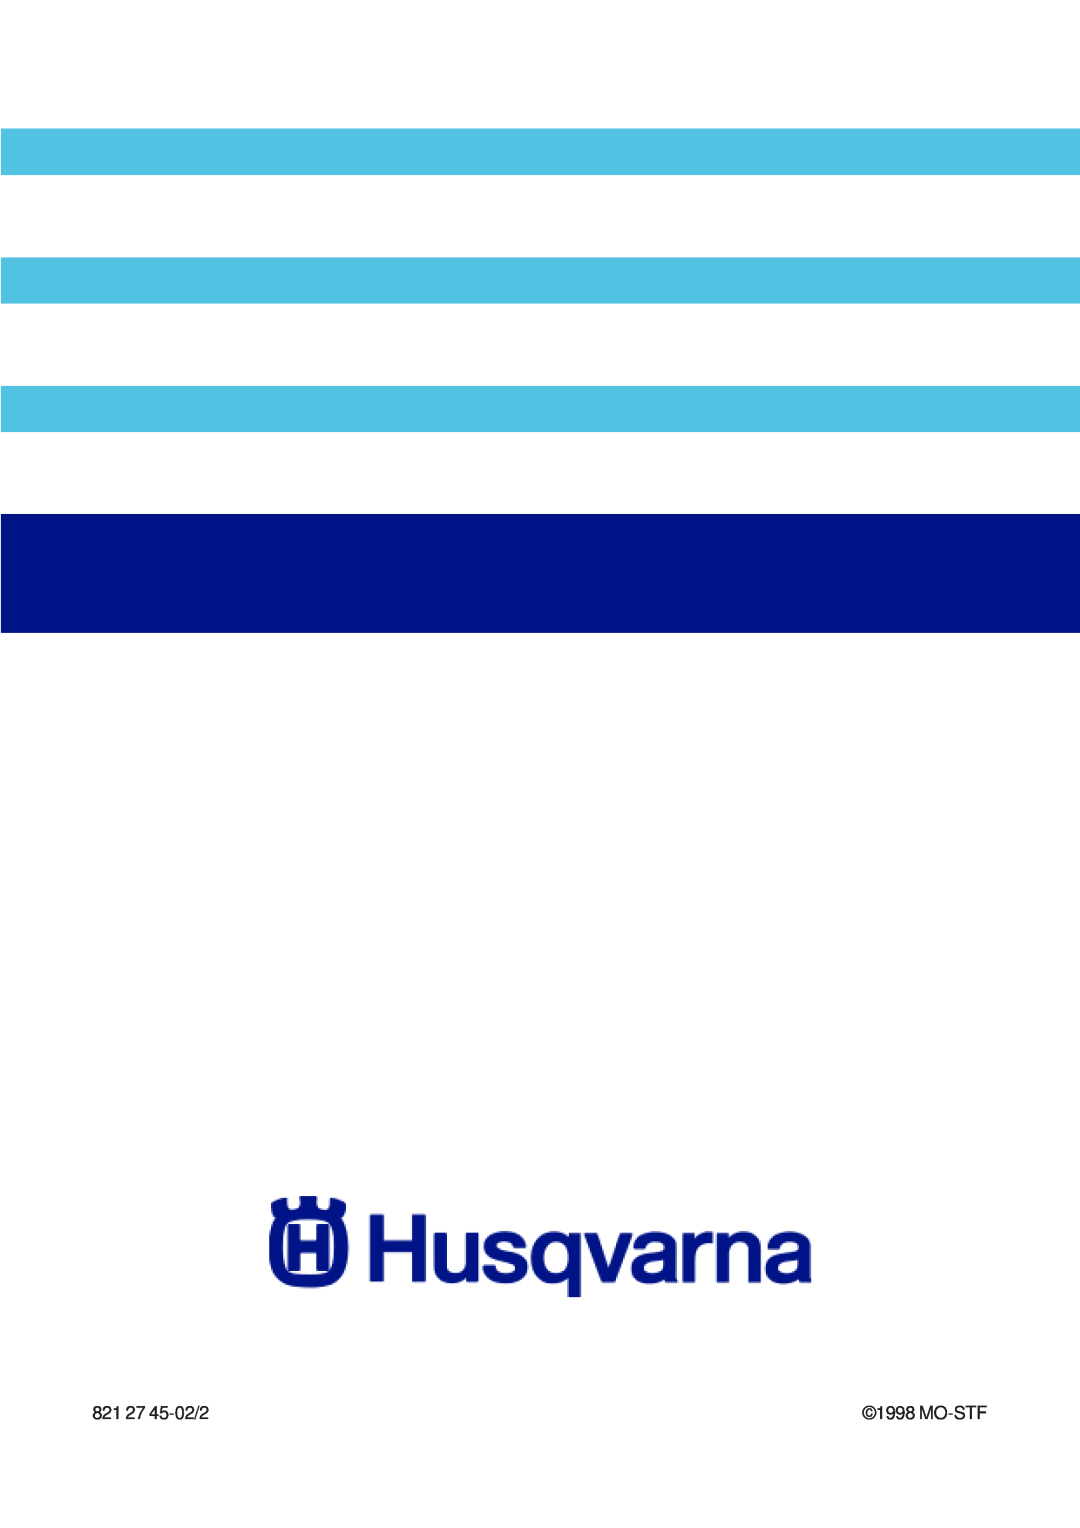 Husqvarna QC 620, QC 720, QC 520 user manual 821 27 45-02/2, Mo-Stf 